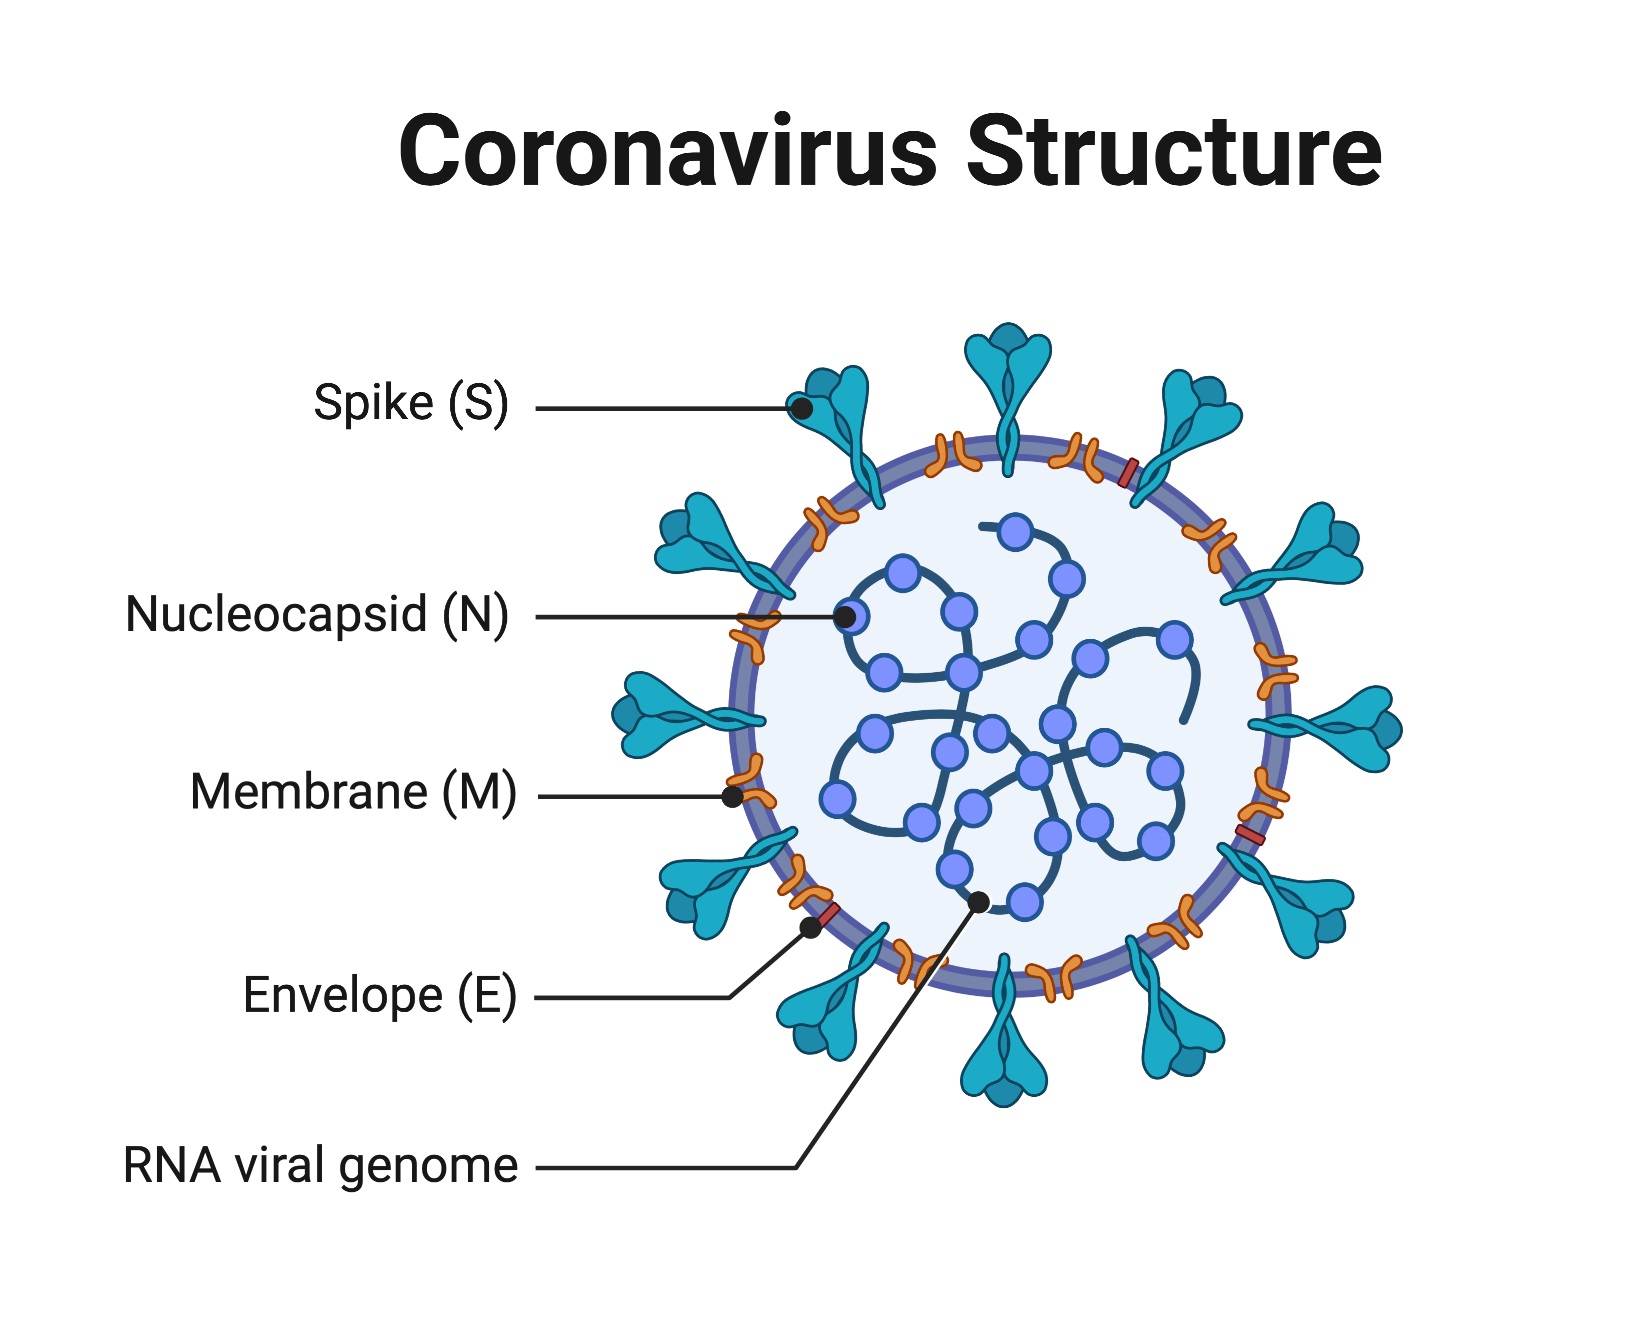 Coronavirus Structure, Vaccine and Therapy Development